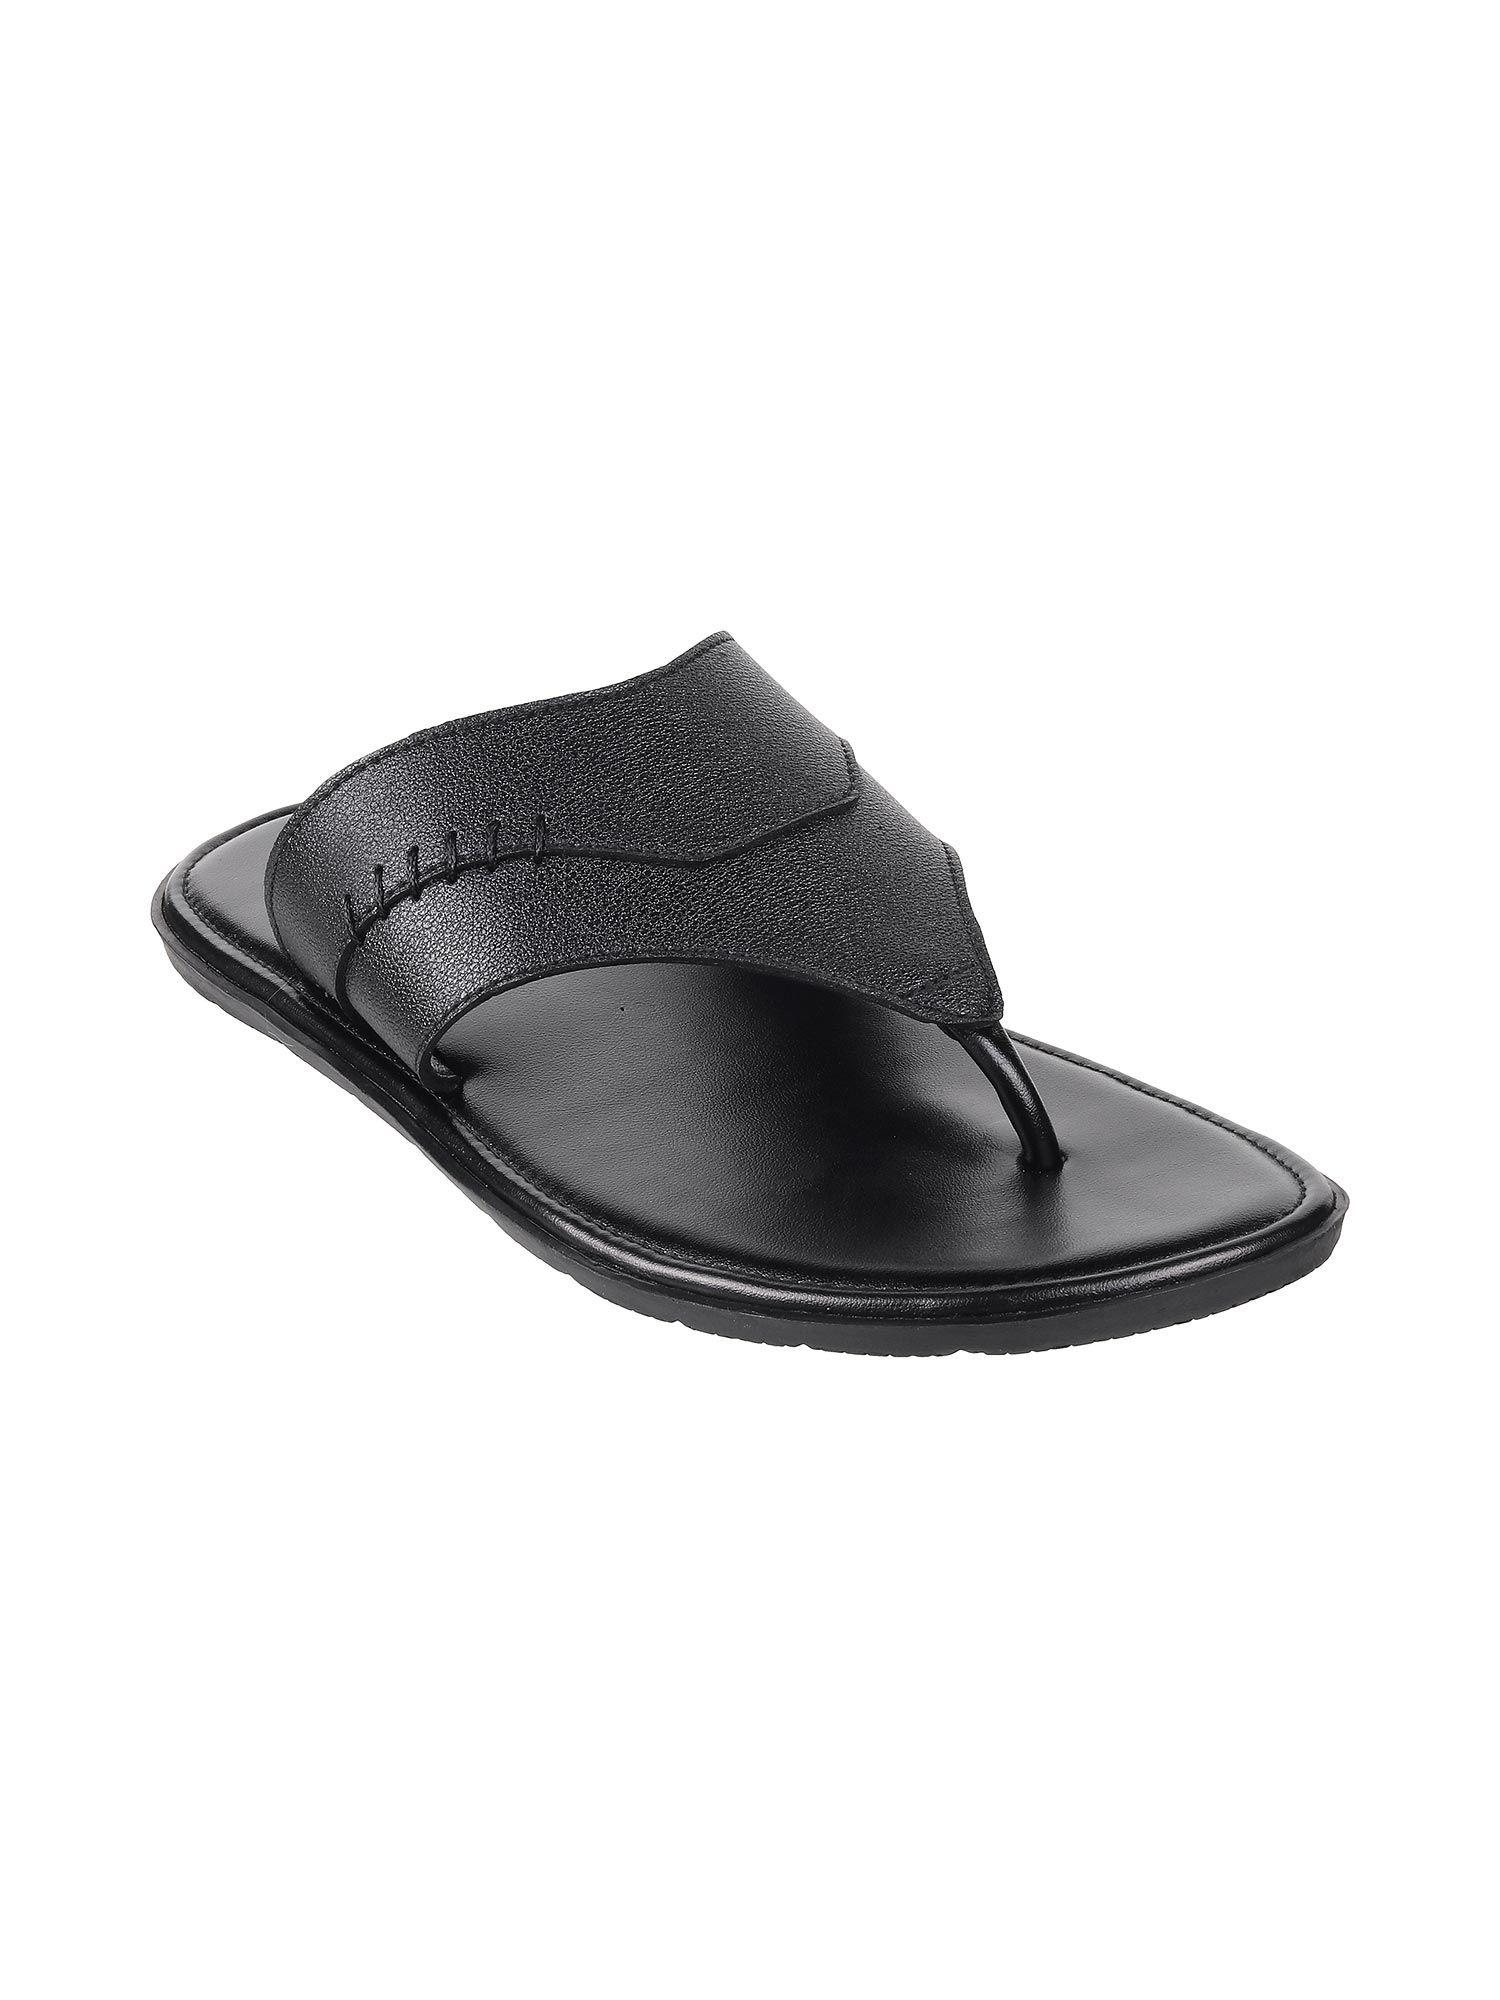 mens-black-flat-chappalsmochi-mens-black-sandals